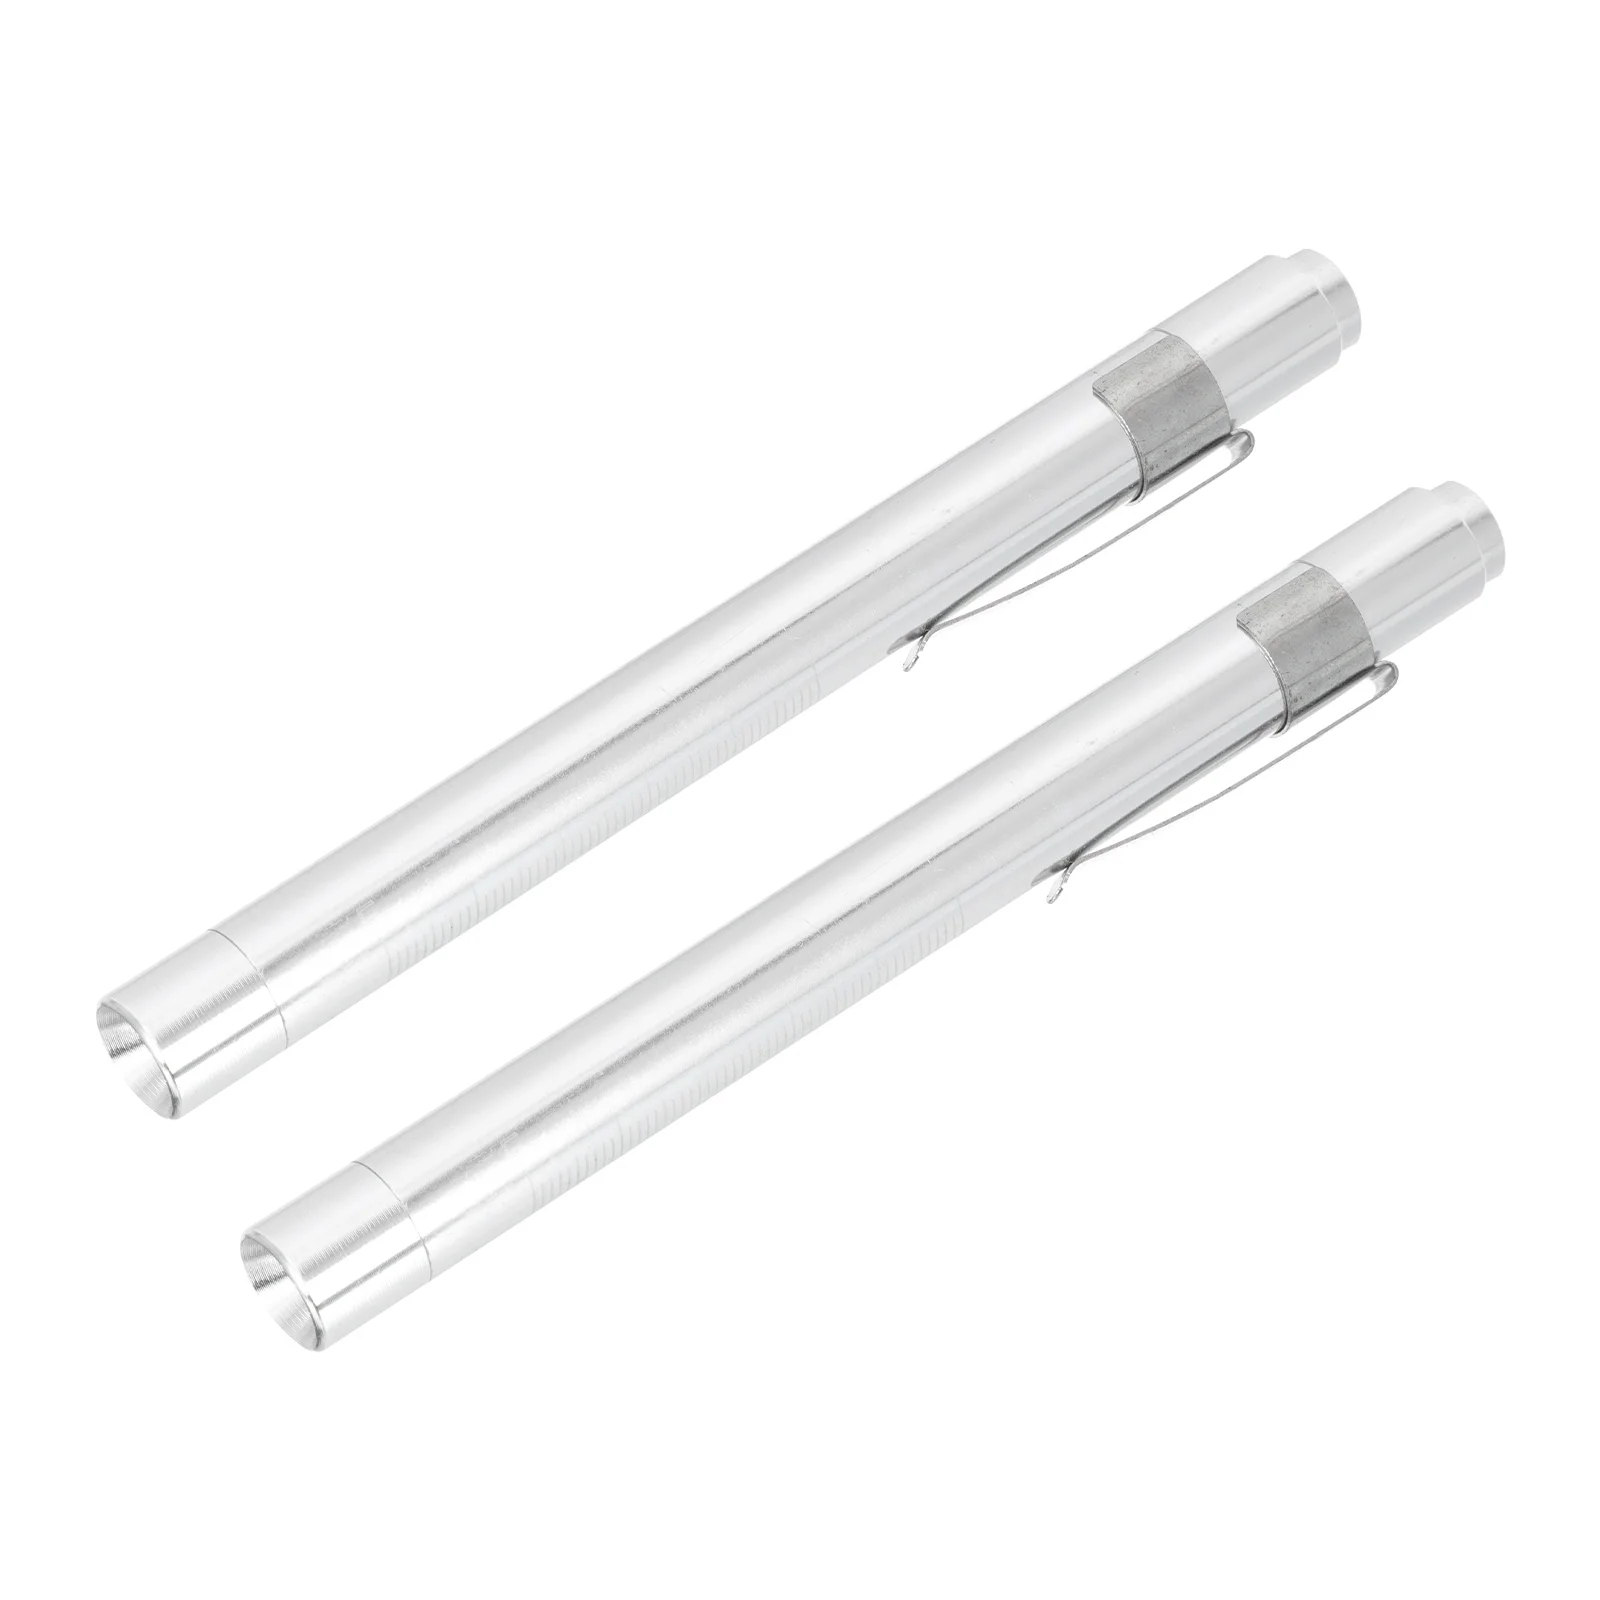 

2 Pcs Pupil Lights LED Pen Lamp Doctors Inspection Pocket Torch Medical Flashlight Portable Nurse Clinic